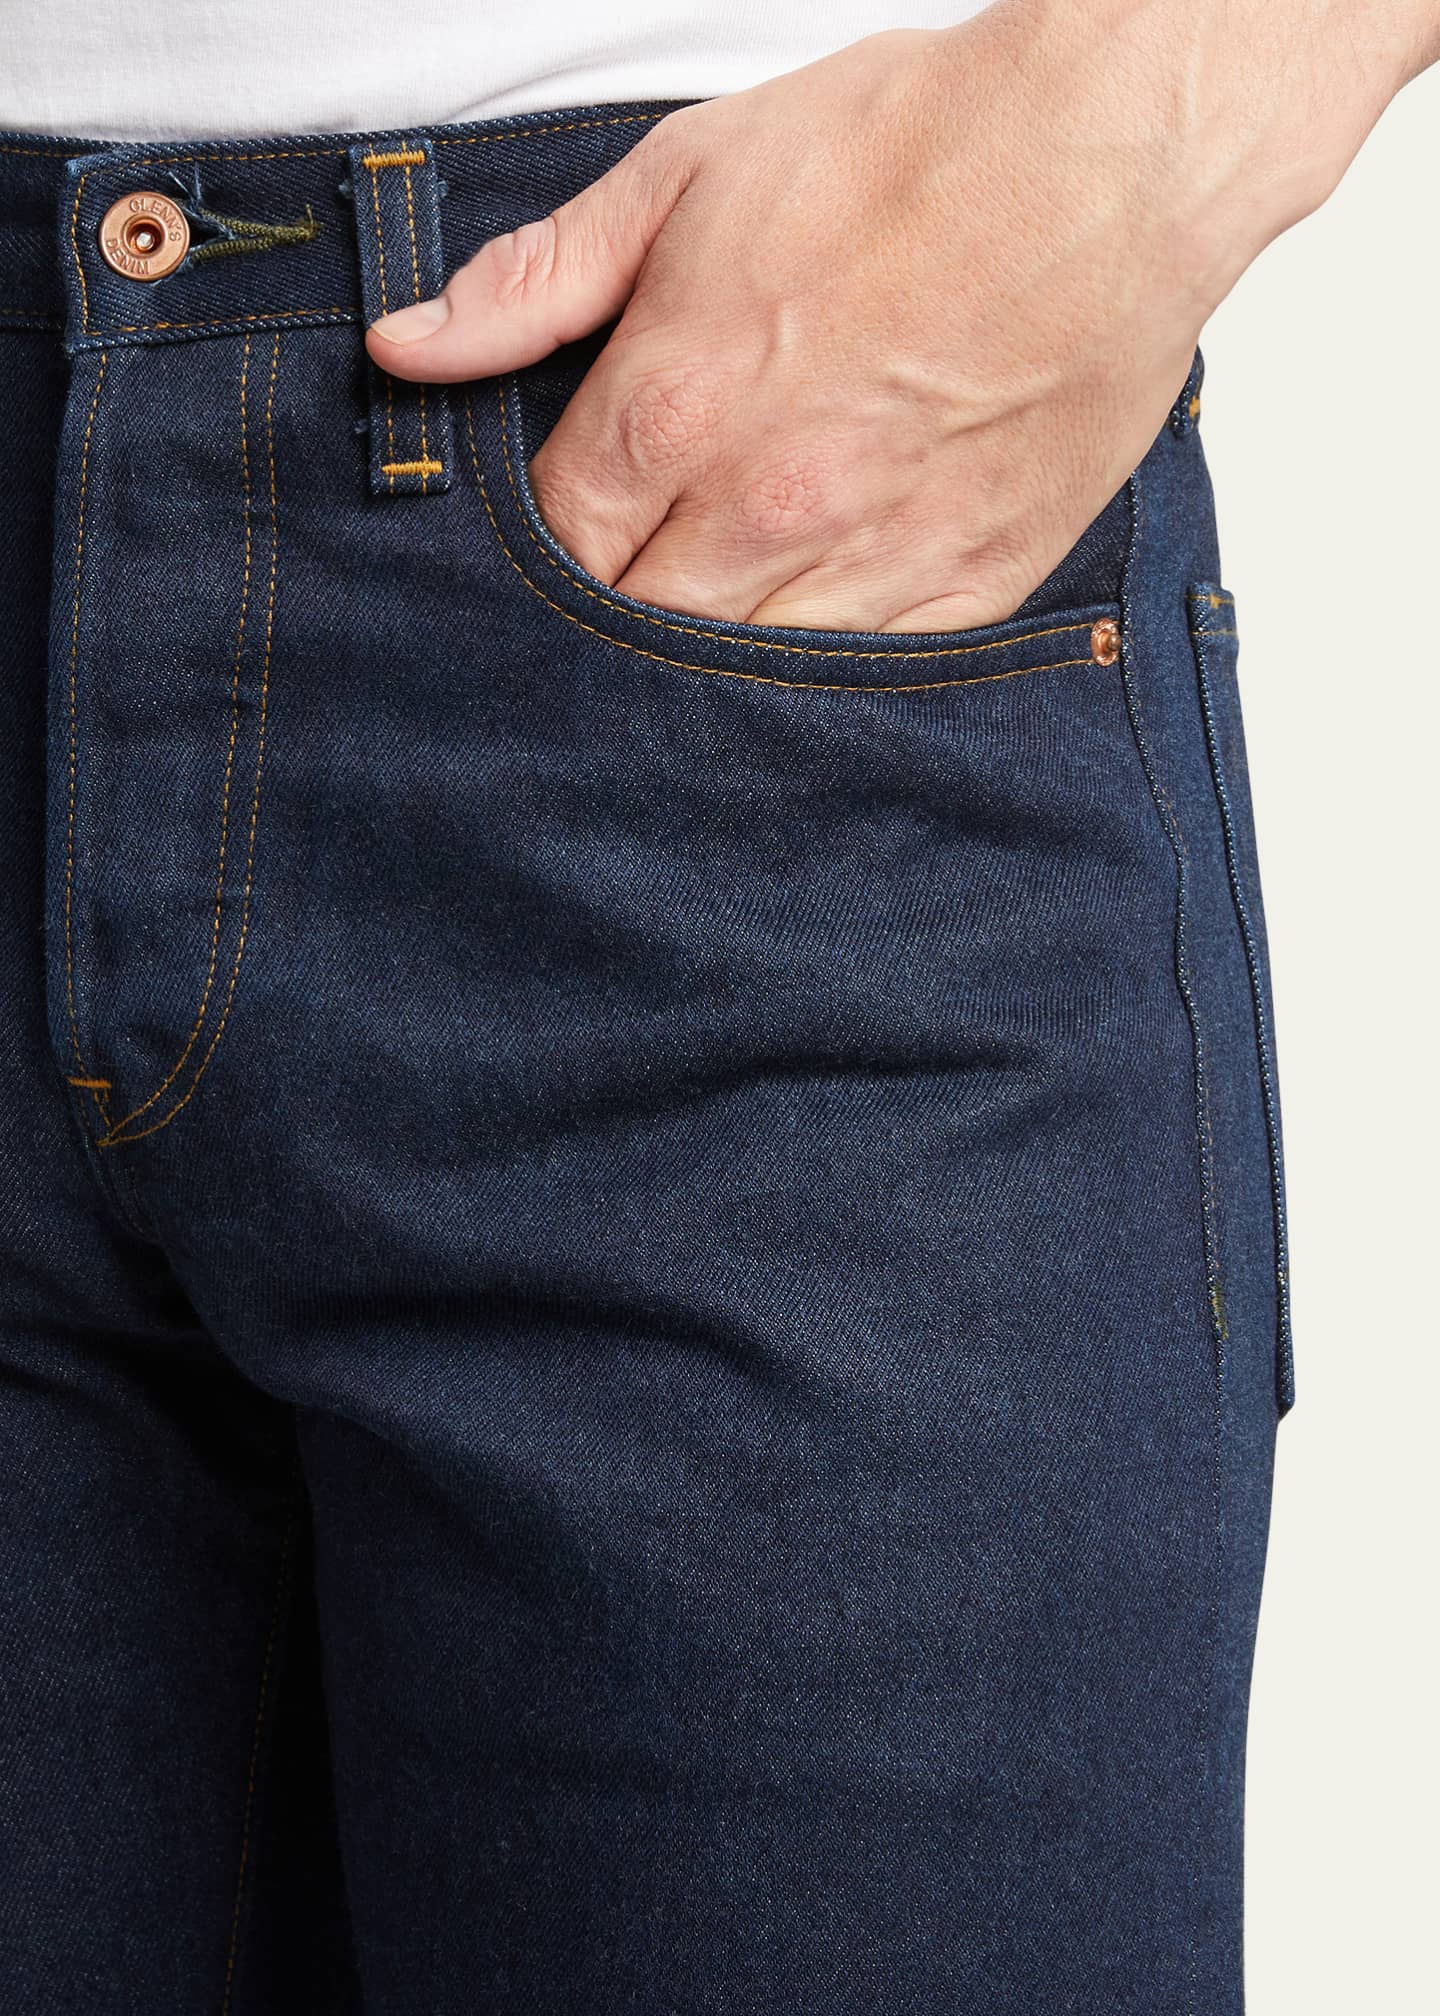 Glenn's Denim Men's Single-Wash Selvedge Denim Jeans - Bergdorf Goodman